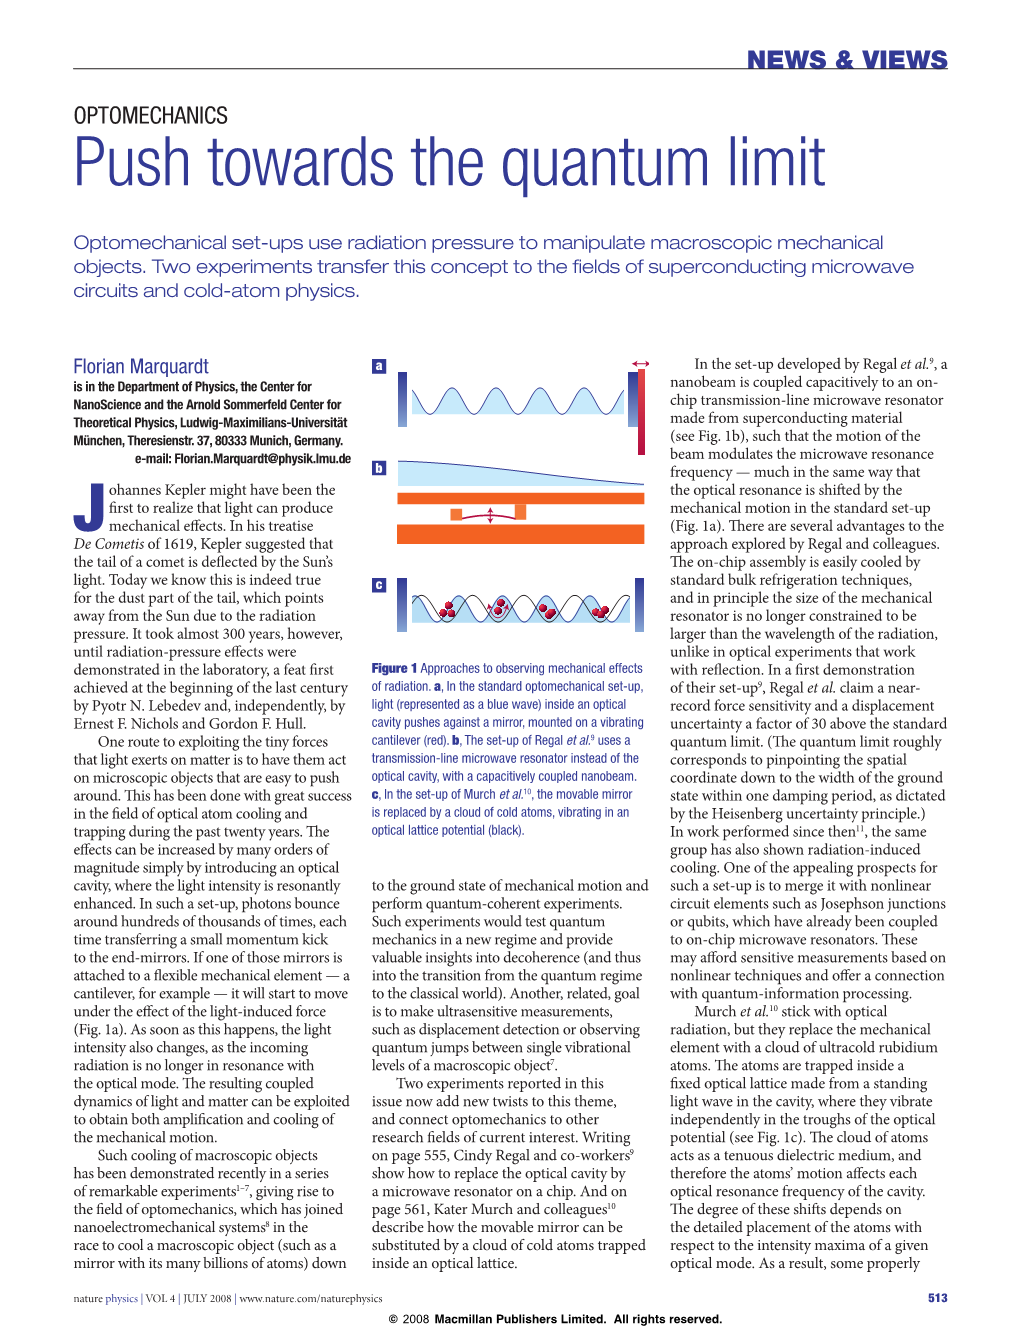 Push Towards the Quantum Limit